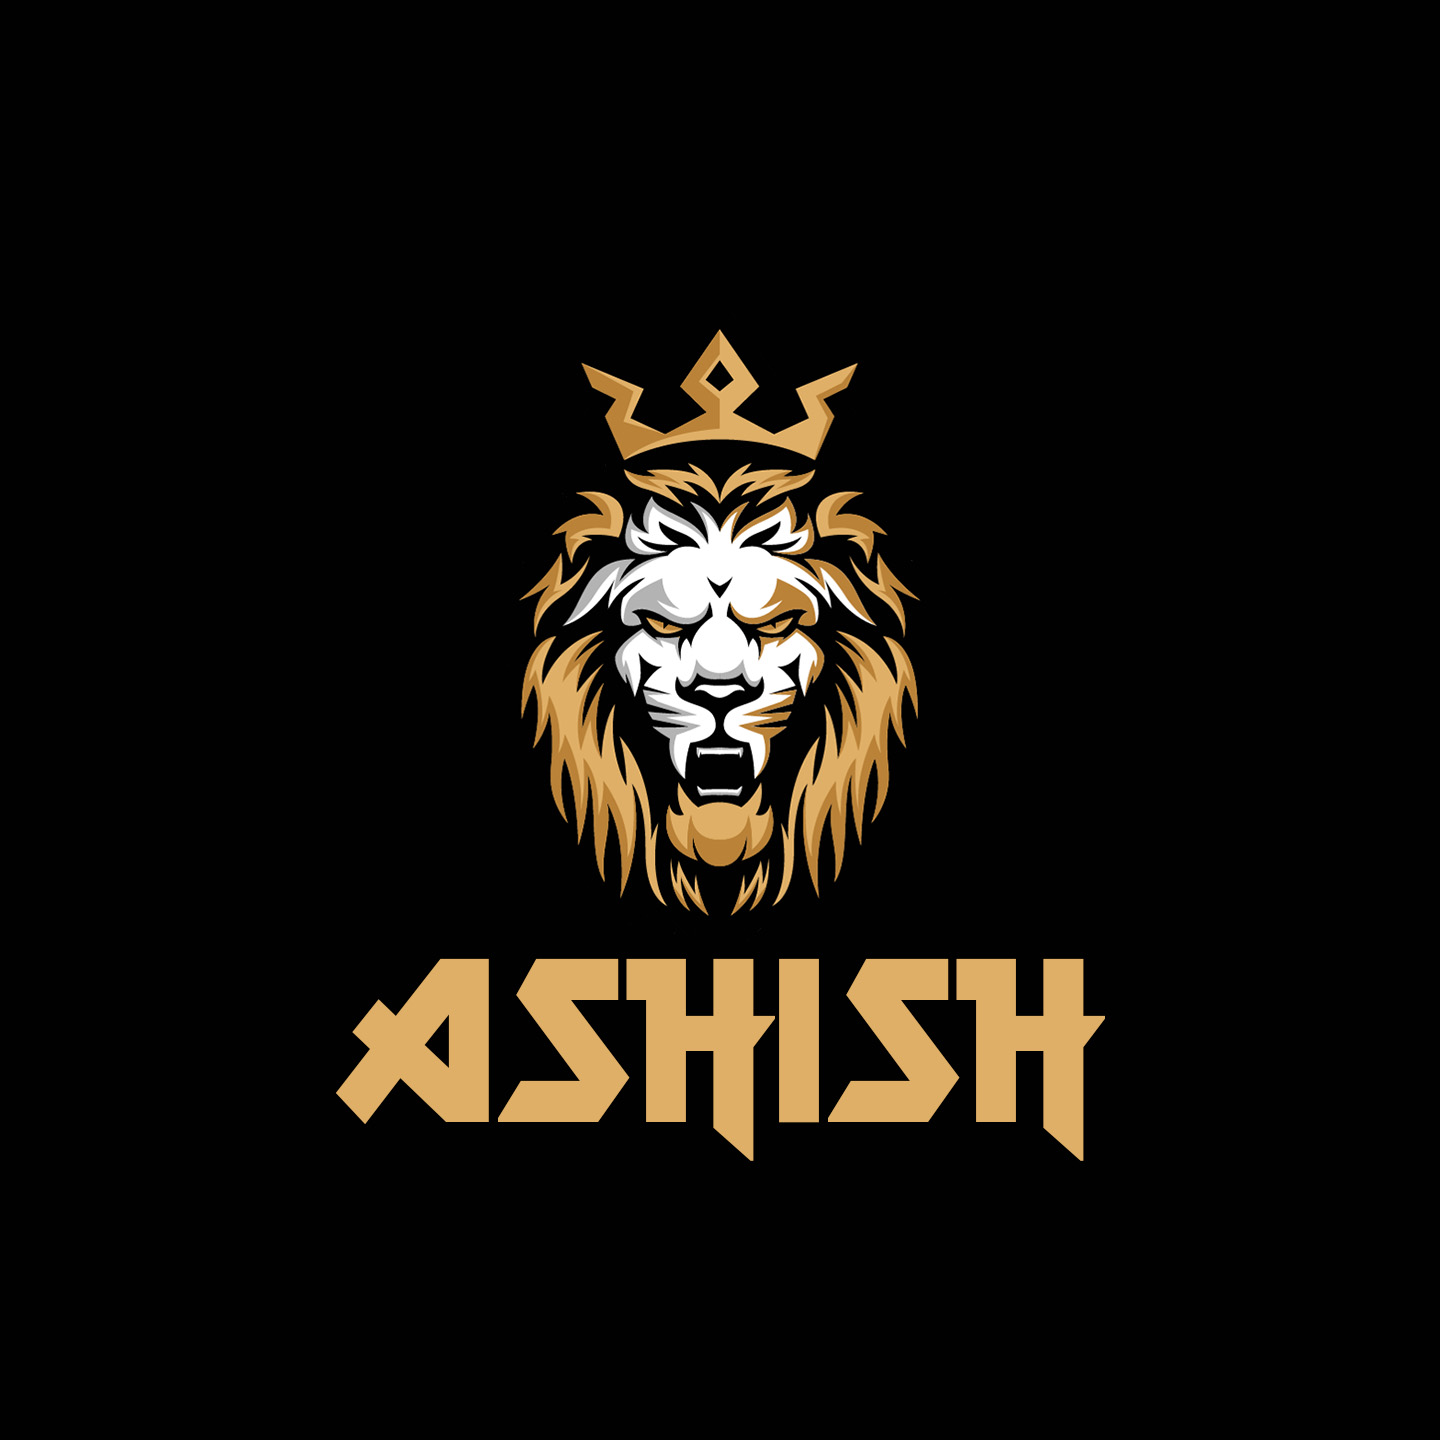 AR Ashish Roka Logo Design by AshishRoka on DeviantArt